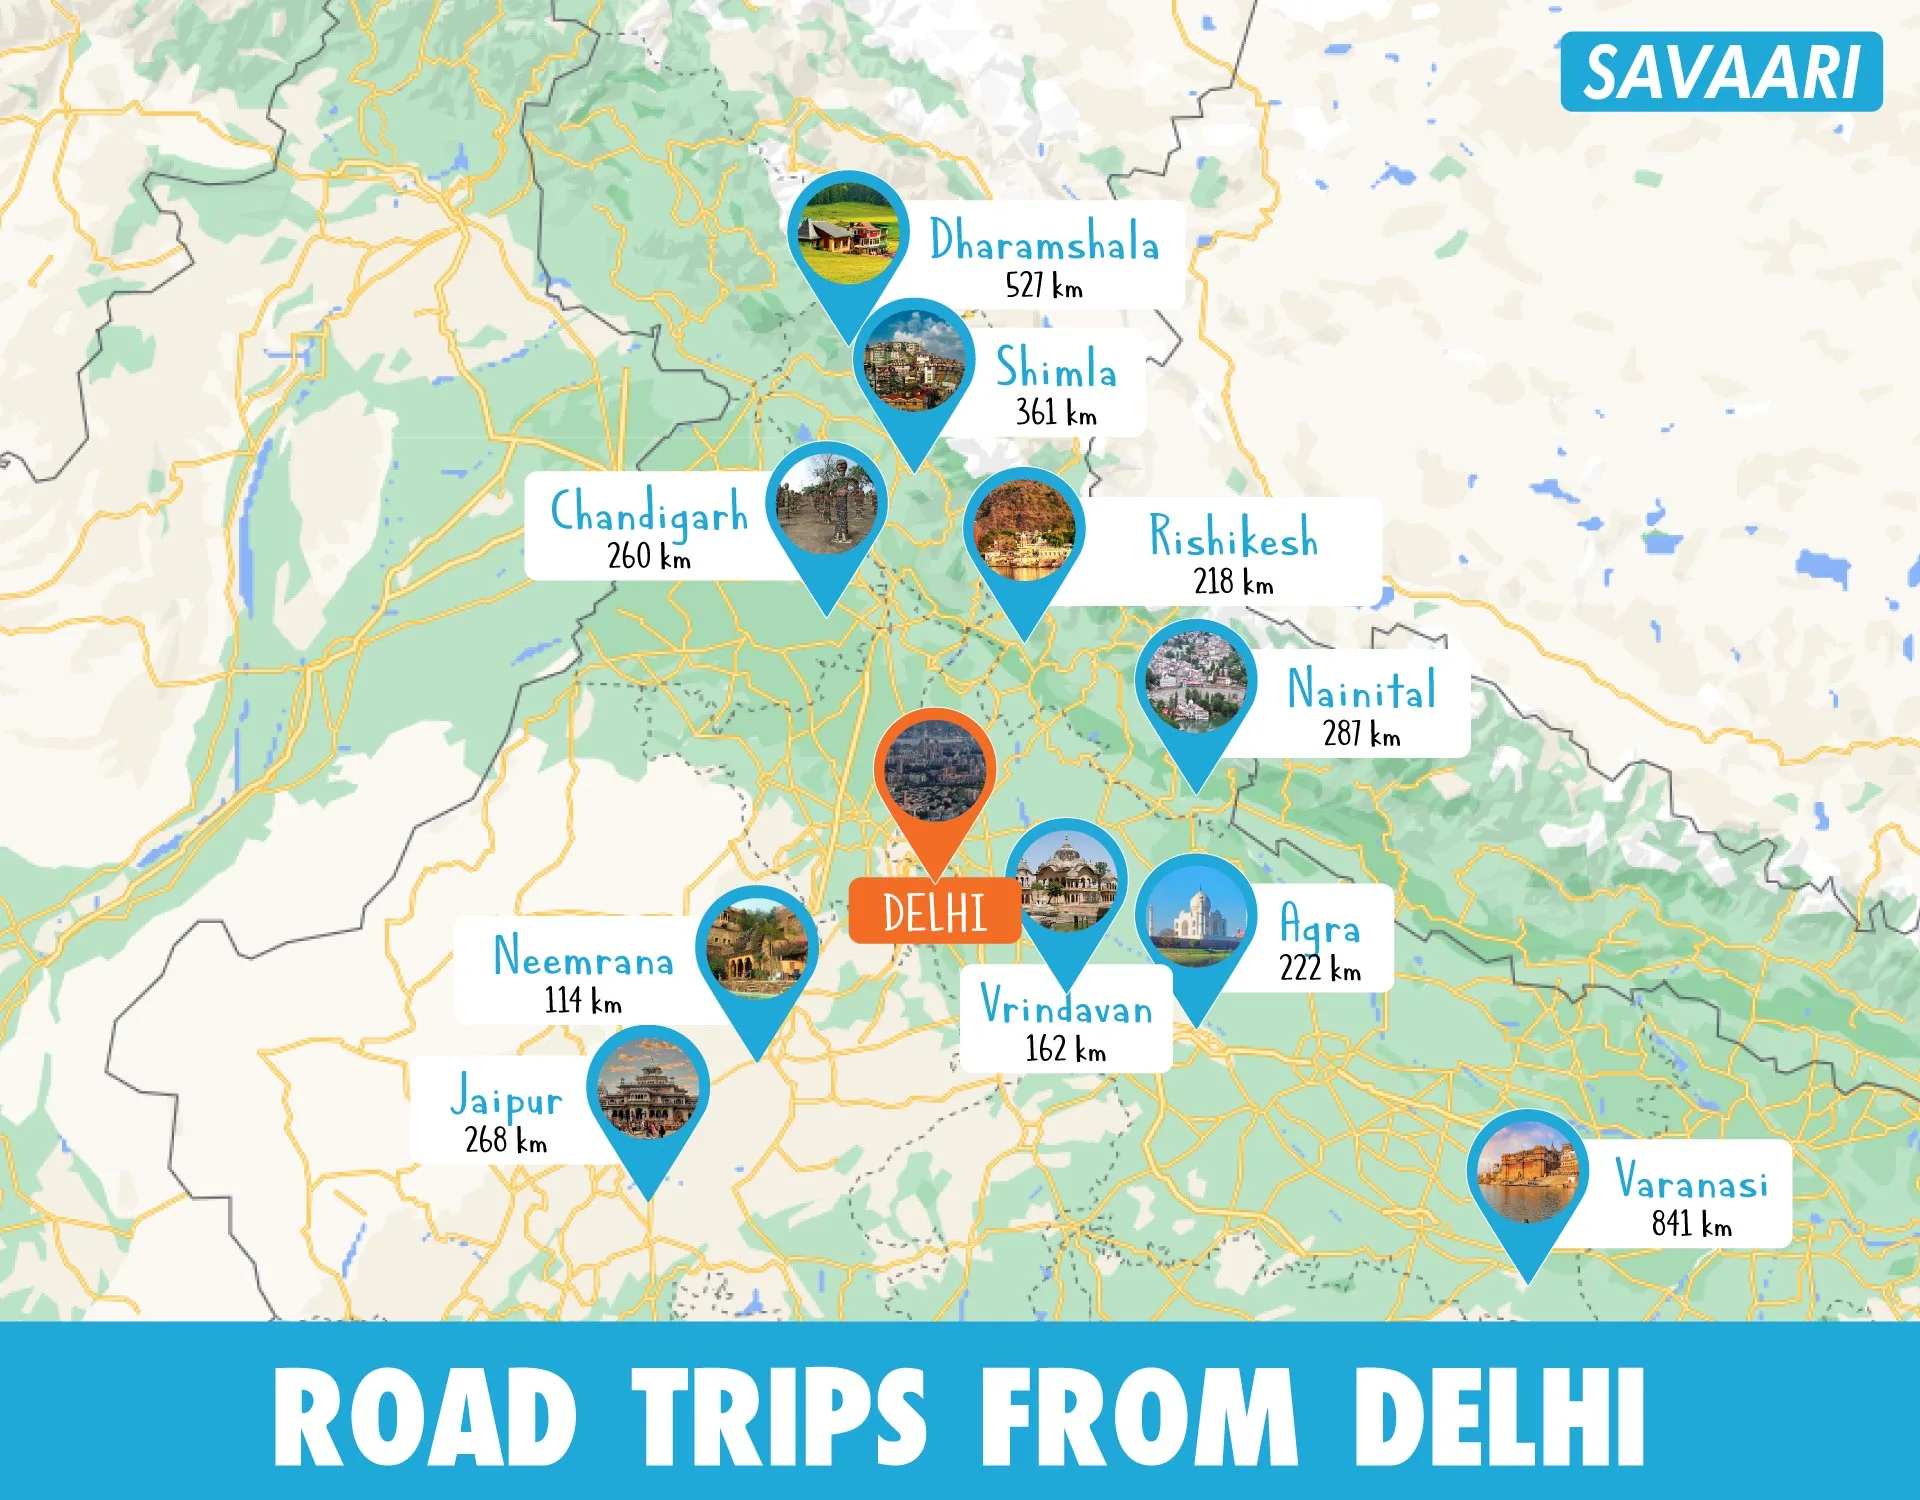 Places to visit near Delhi